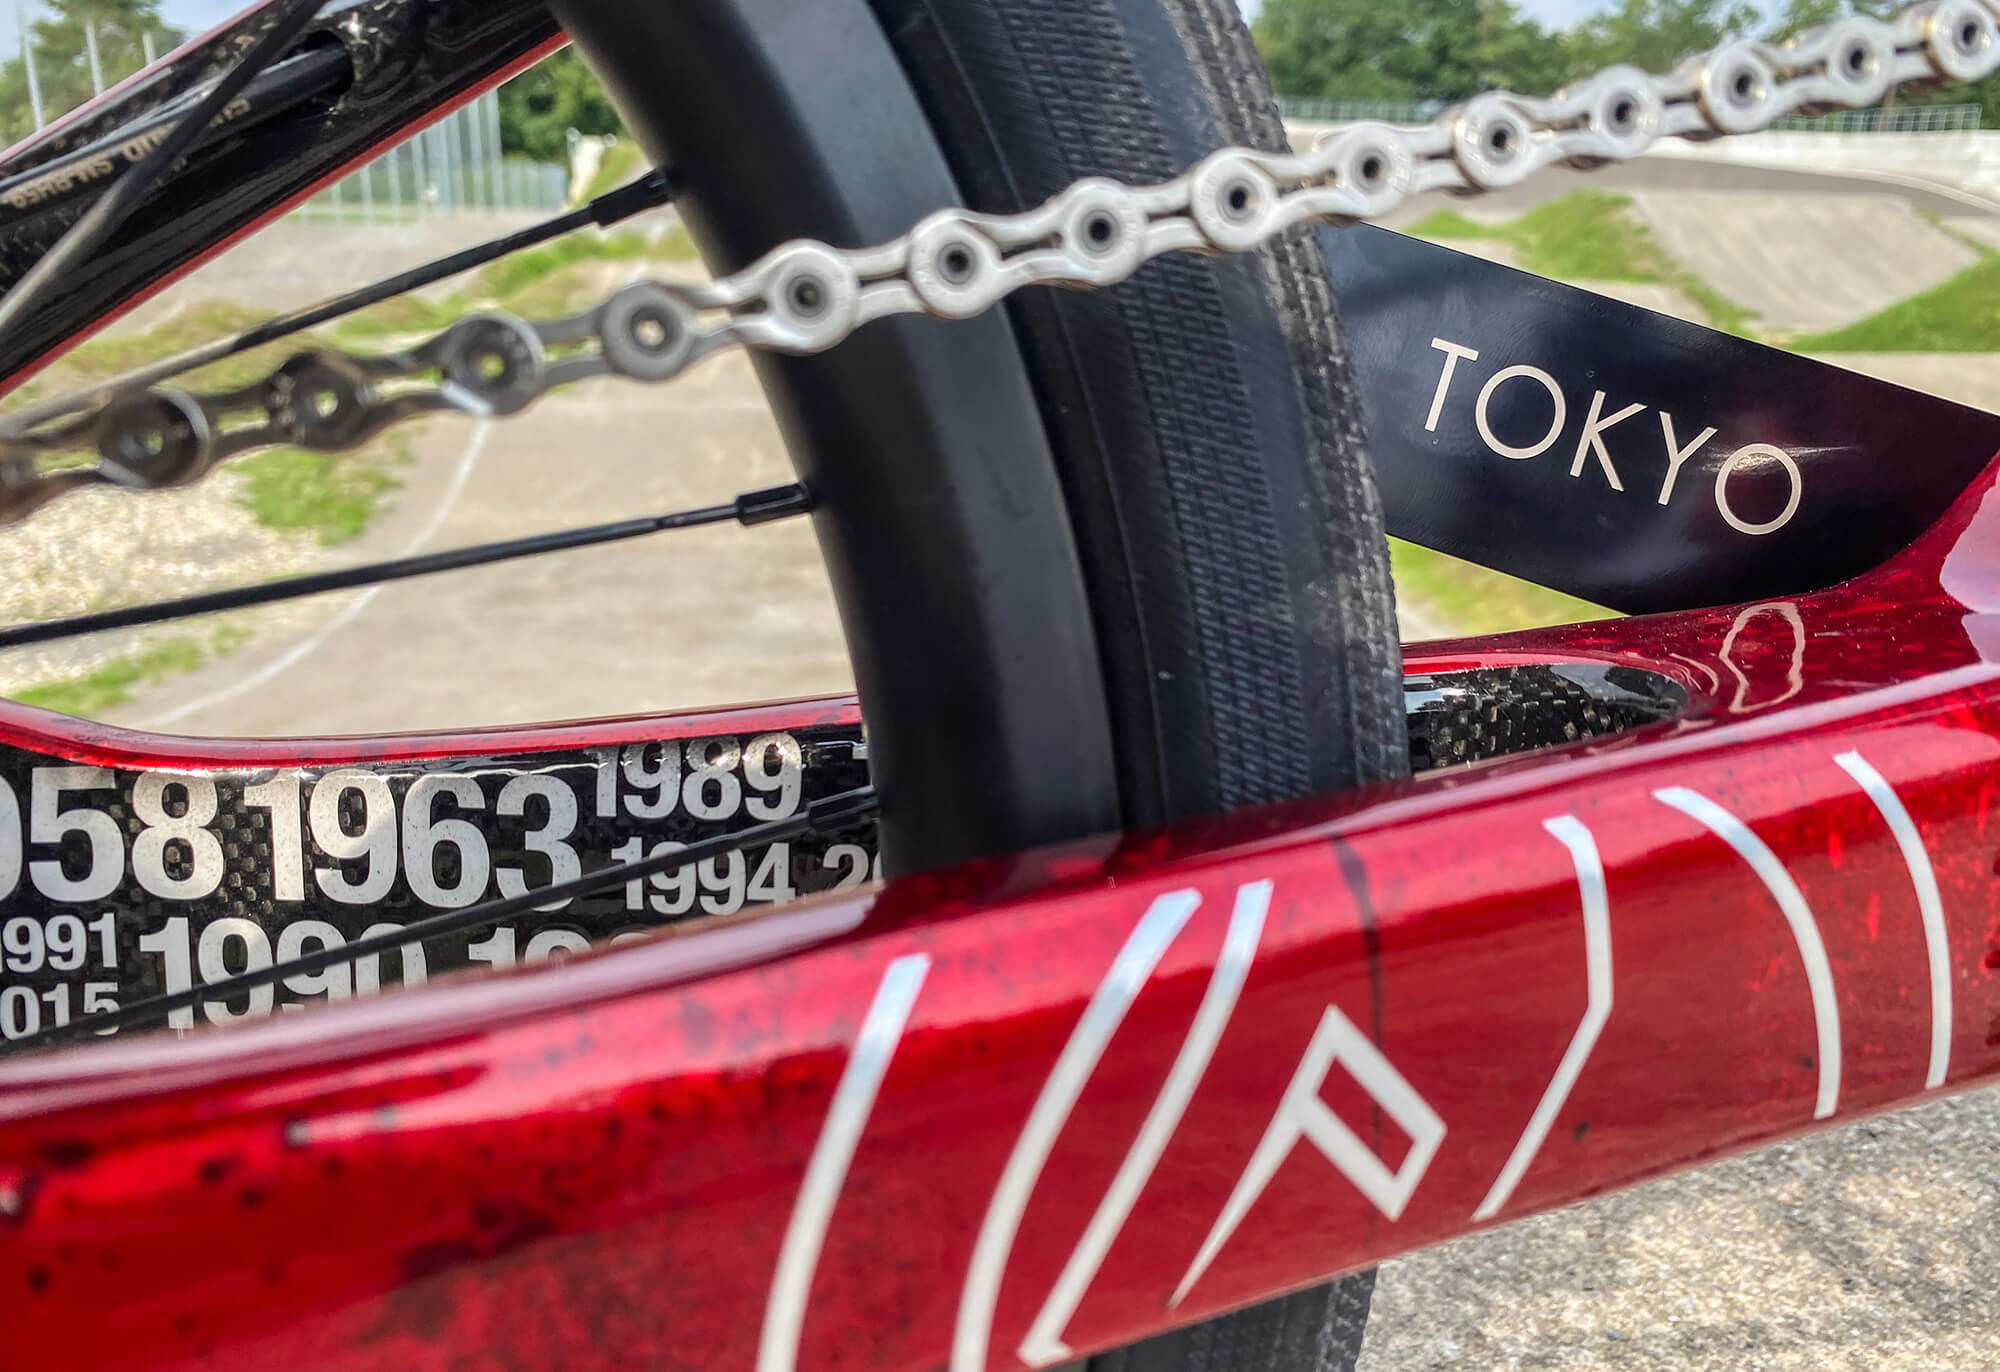 David Graf Tokyo 2020 Olympic Bike Check